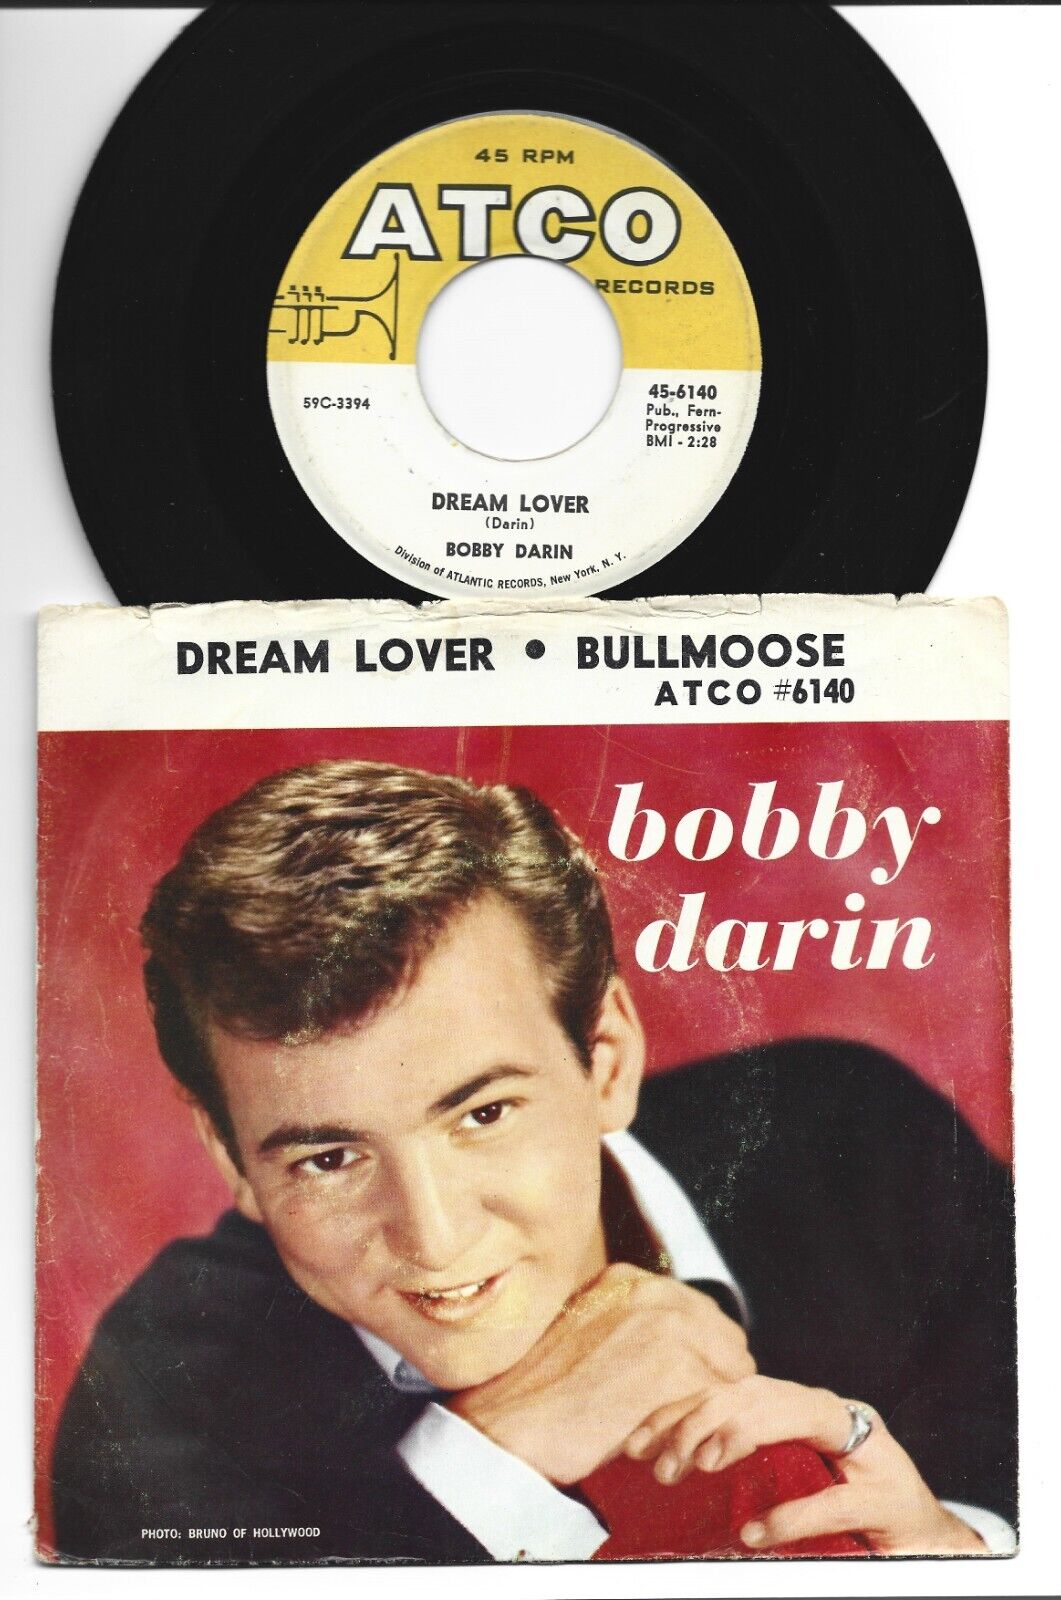 TEEN bw/ ROCKABILLY 45 w PIC SLEEVE- BOBBY DARIN - DREAM LOVER- HEAR - 1959 ATCO